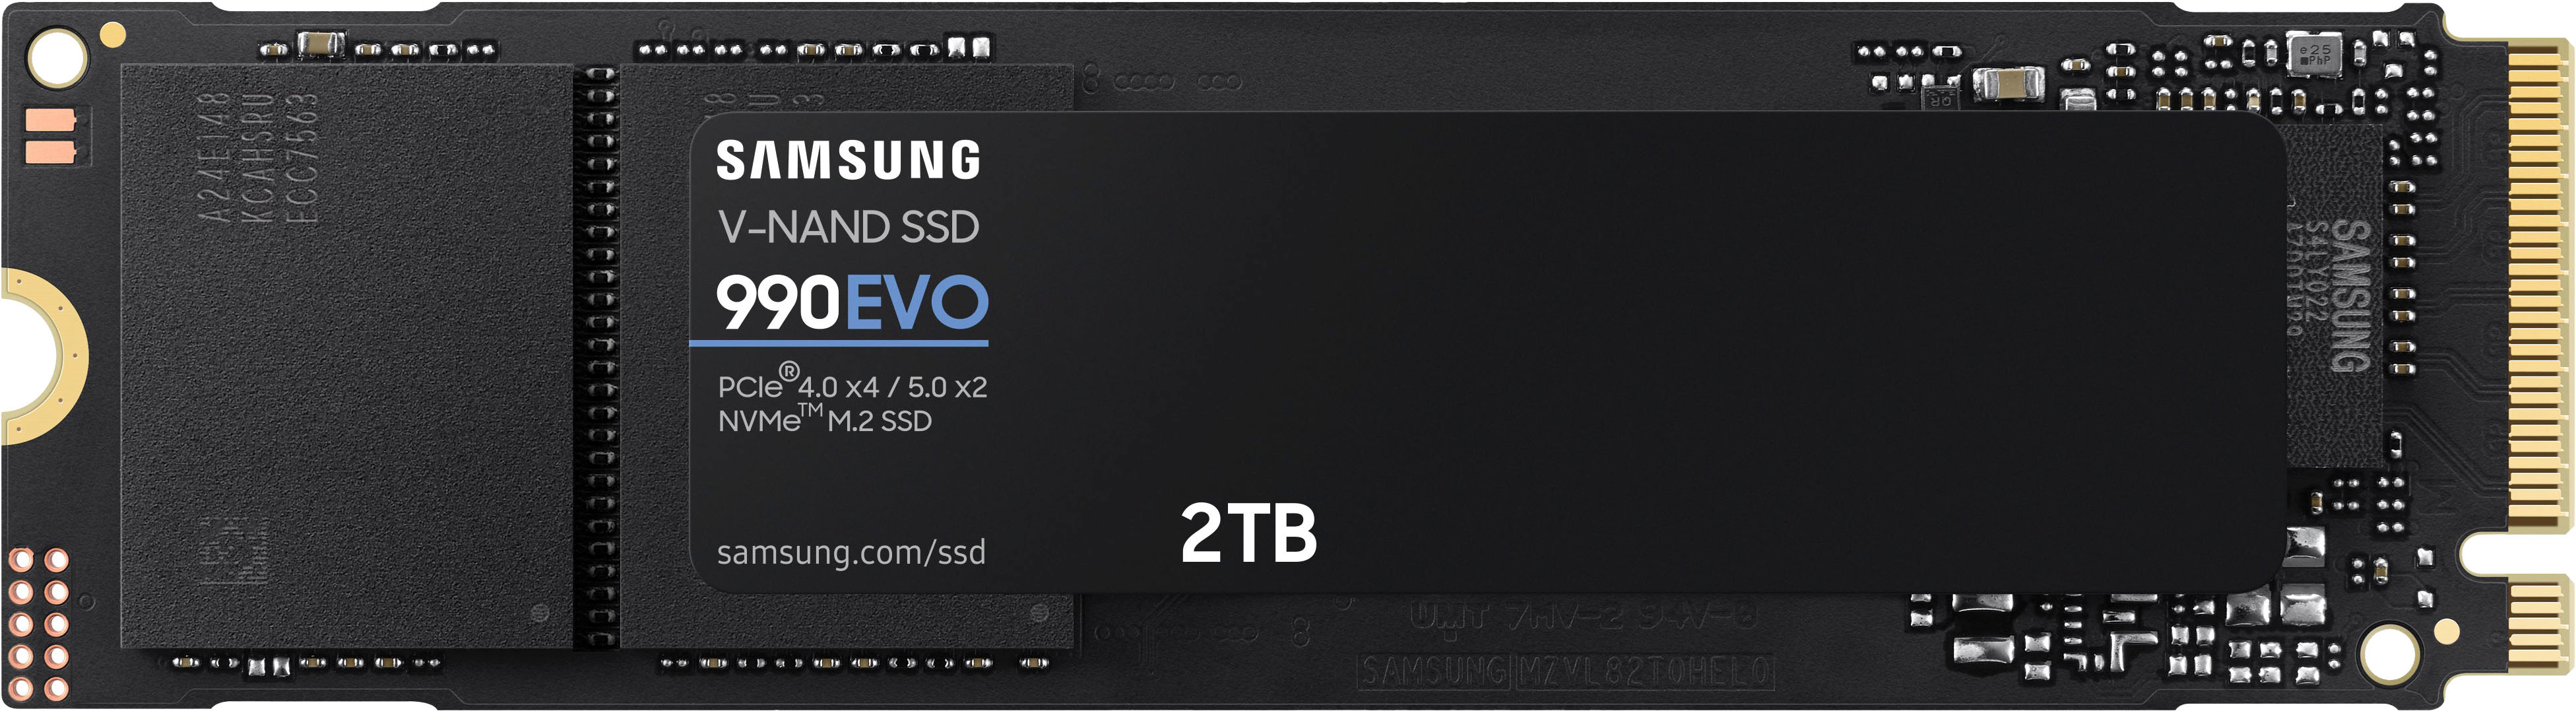 Samsung 990 EVO SSD 2TB Internal SSD PCIe Gen 4x4 | Gen 5x2 M.2 ...